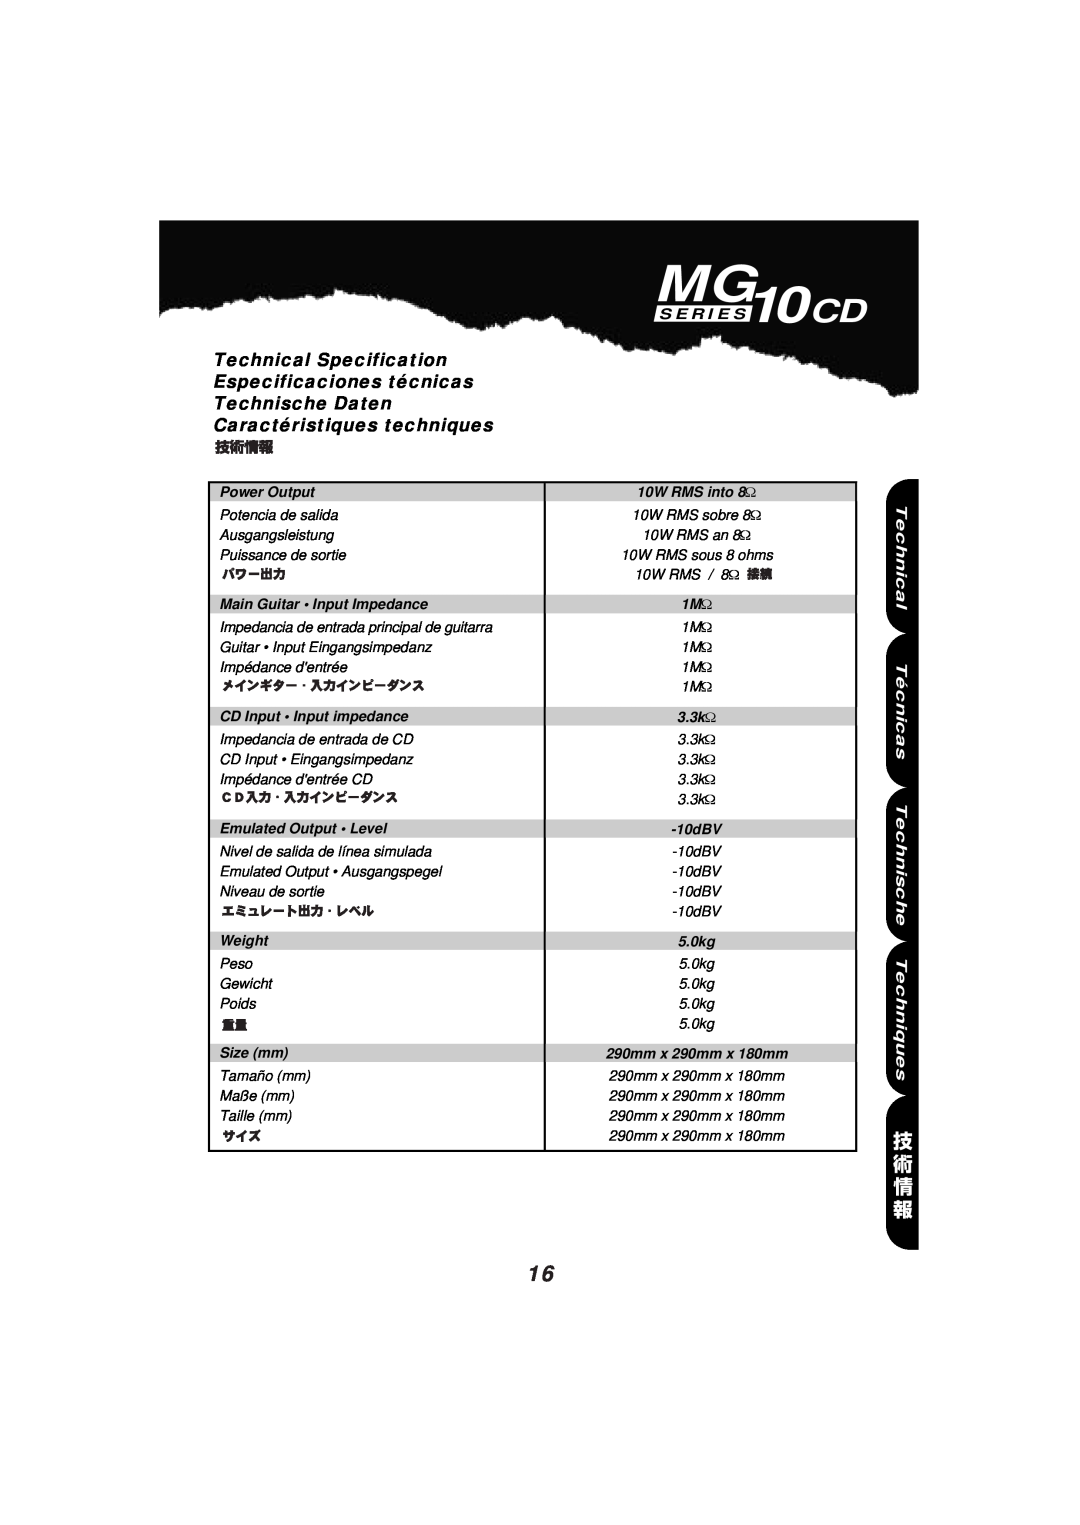 Marshall Amplification MG10CD Technical Técnicas Technische Techniques, Technical Specification, Especificaciones técnicas 